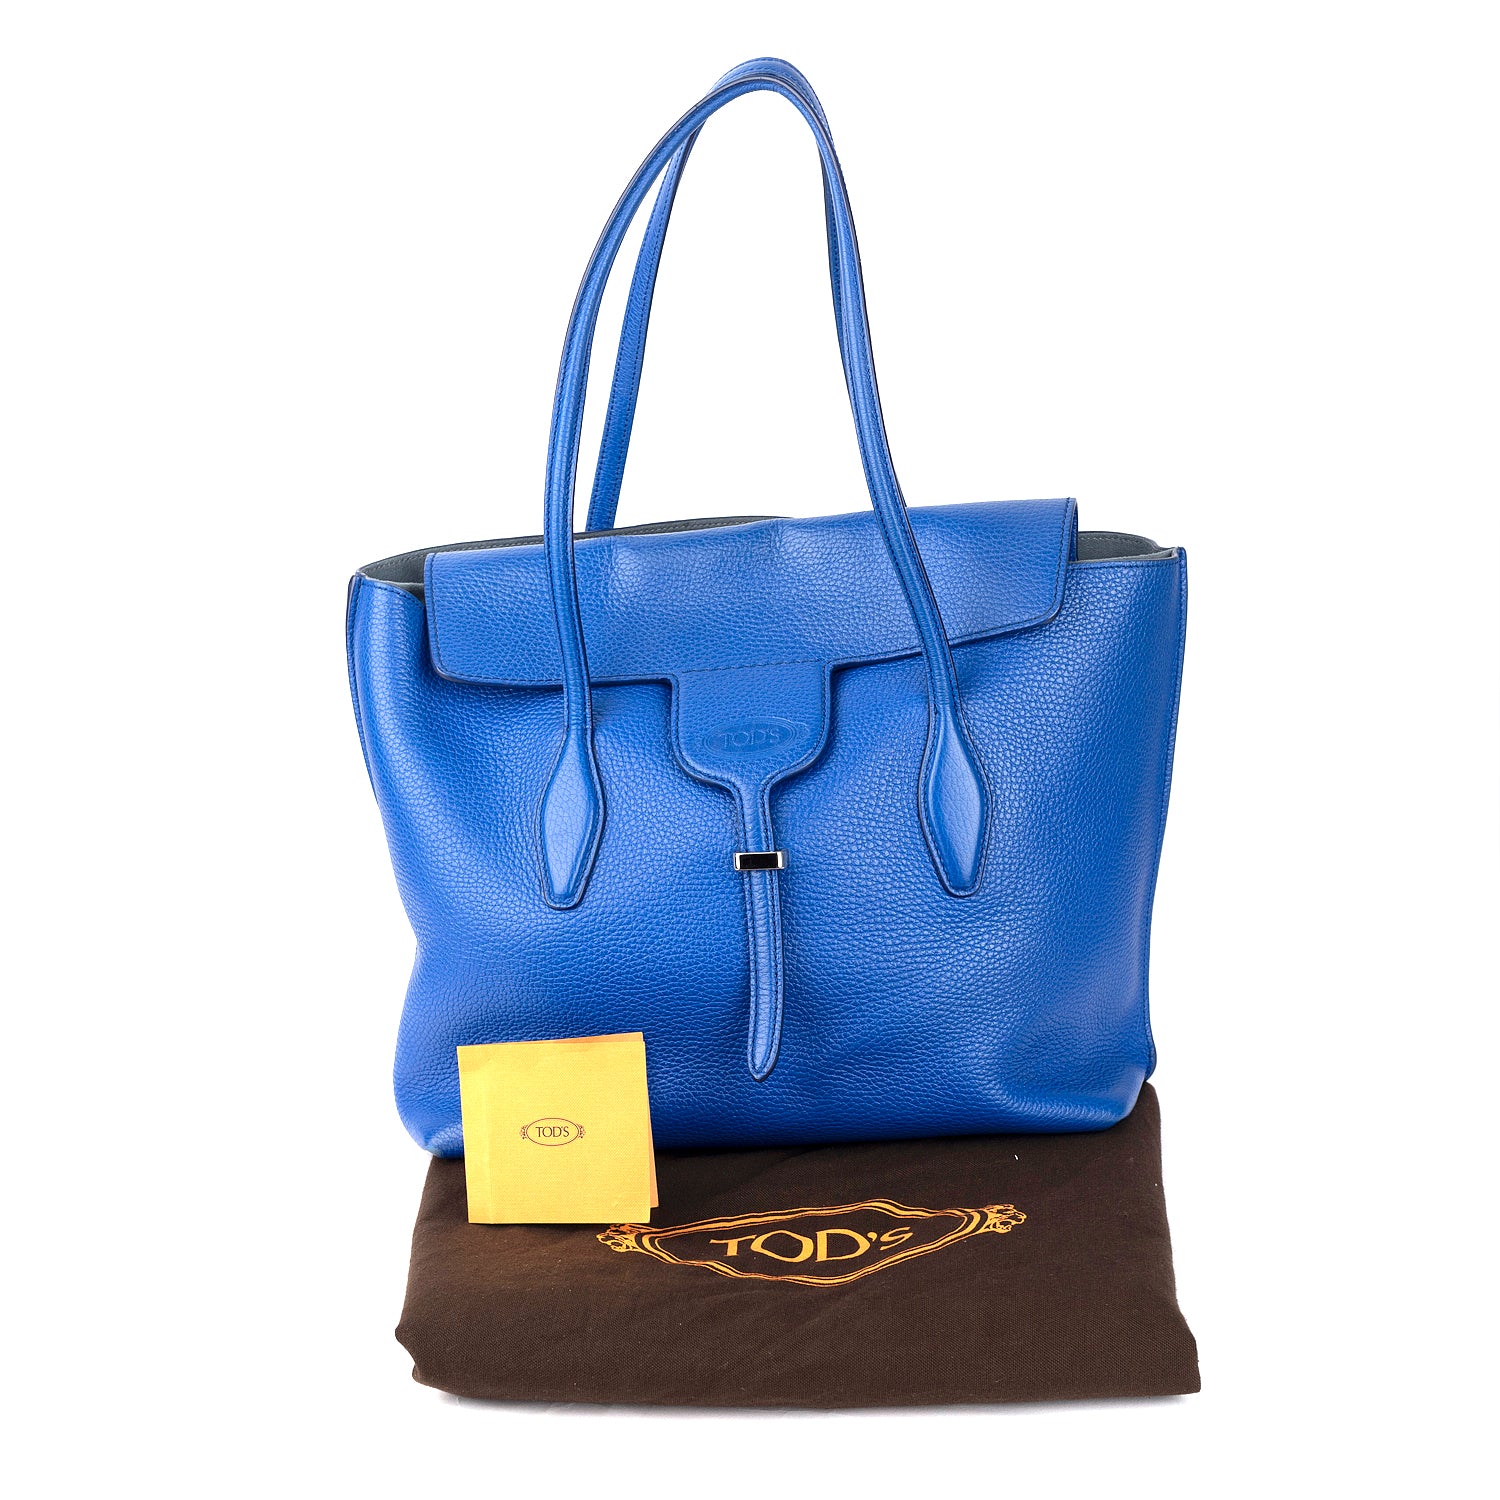 Joy Bag Blue Leather Handbag